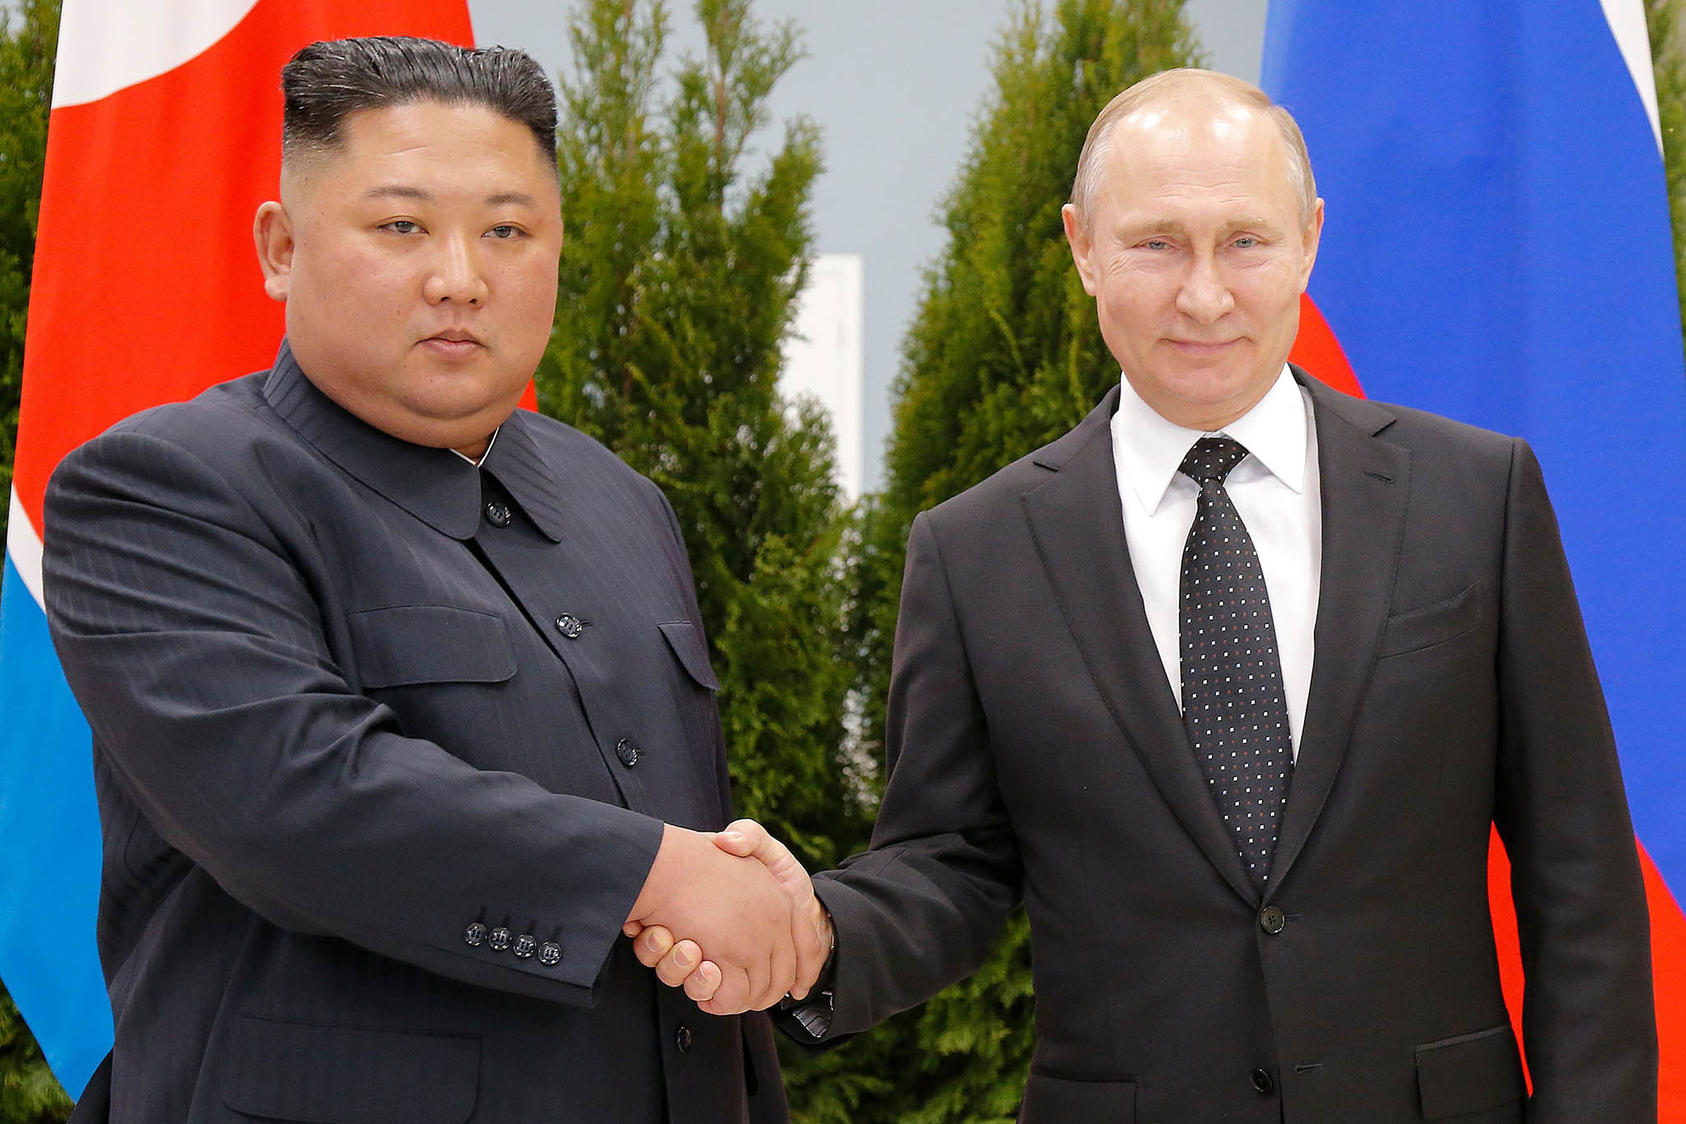 Russian President Vladimir Putin, right, and North Korea’s leader, Kim Jong Un, met in Vladivostok, Russia, April 25, 2019. (Alexander Zemlianichenko/Pool via The New York Times)